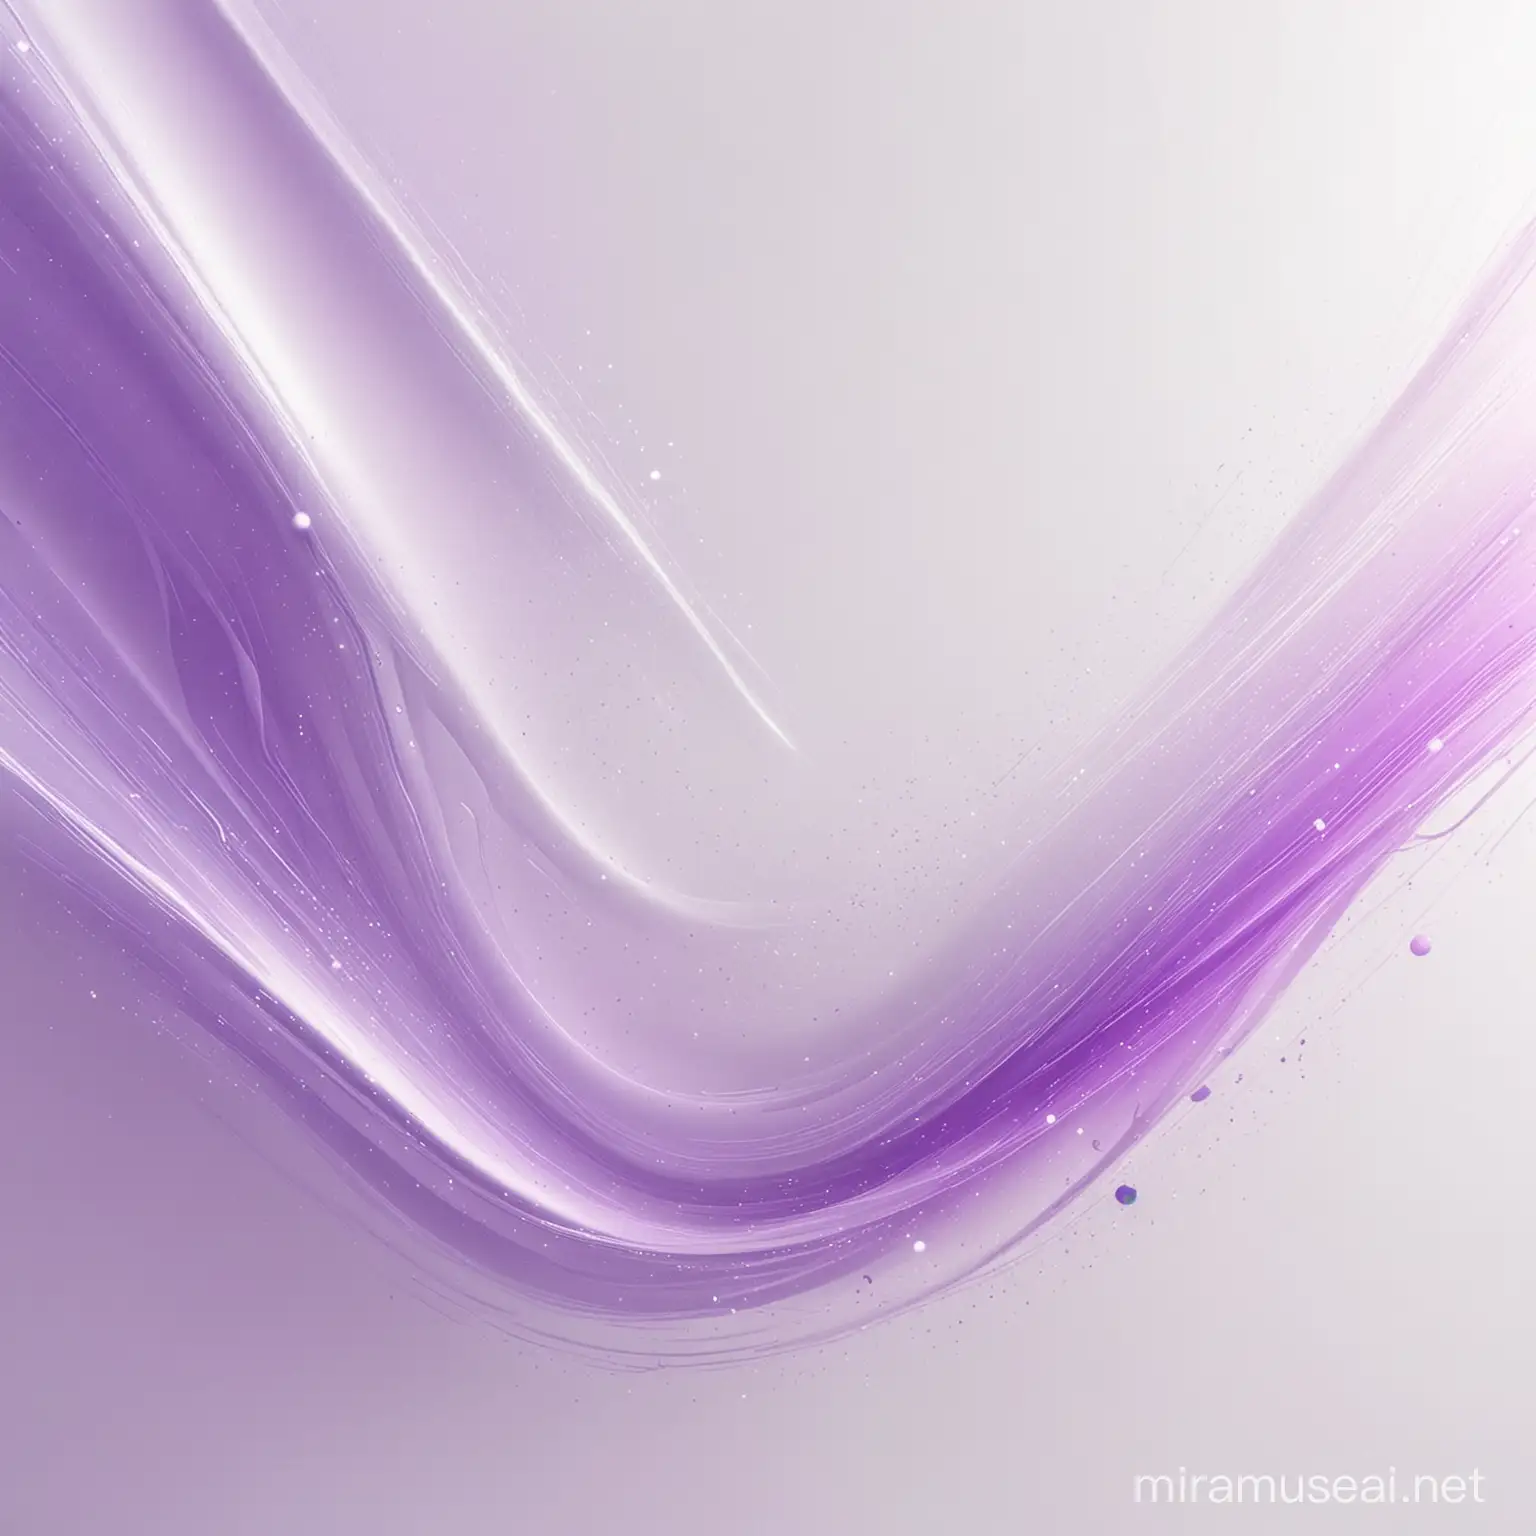 Futuristic White Background with Subtle Purple Accents